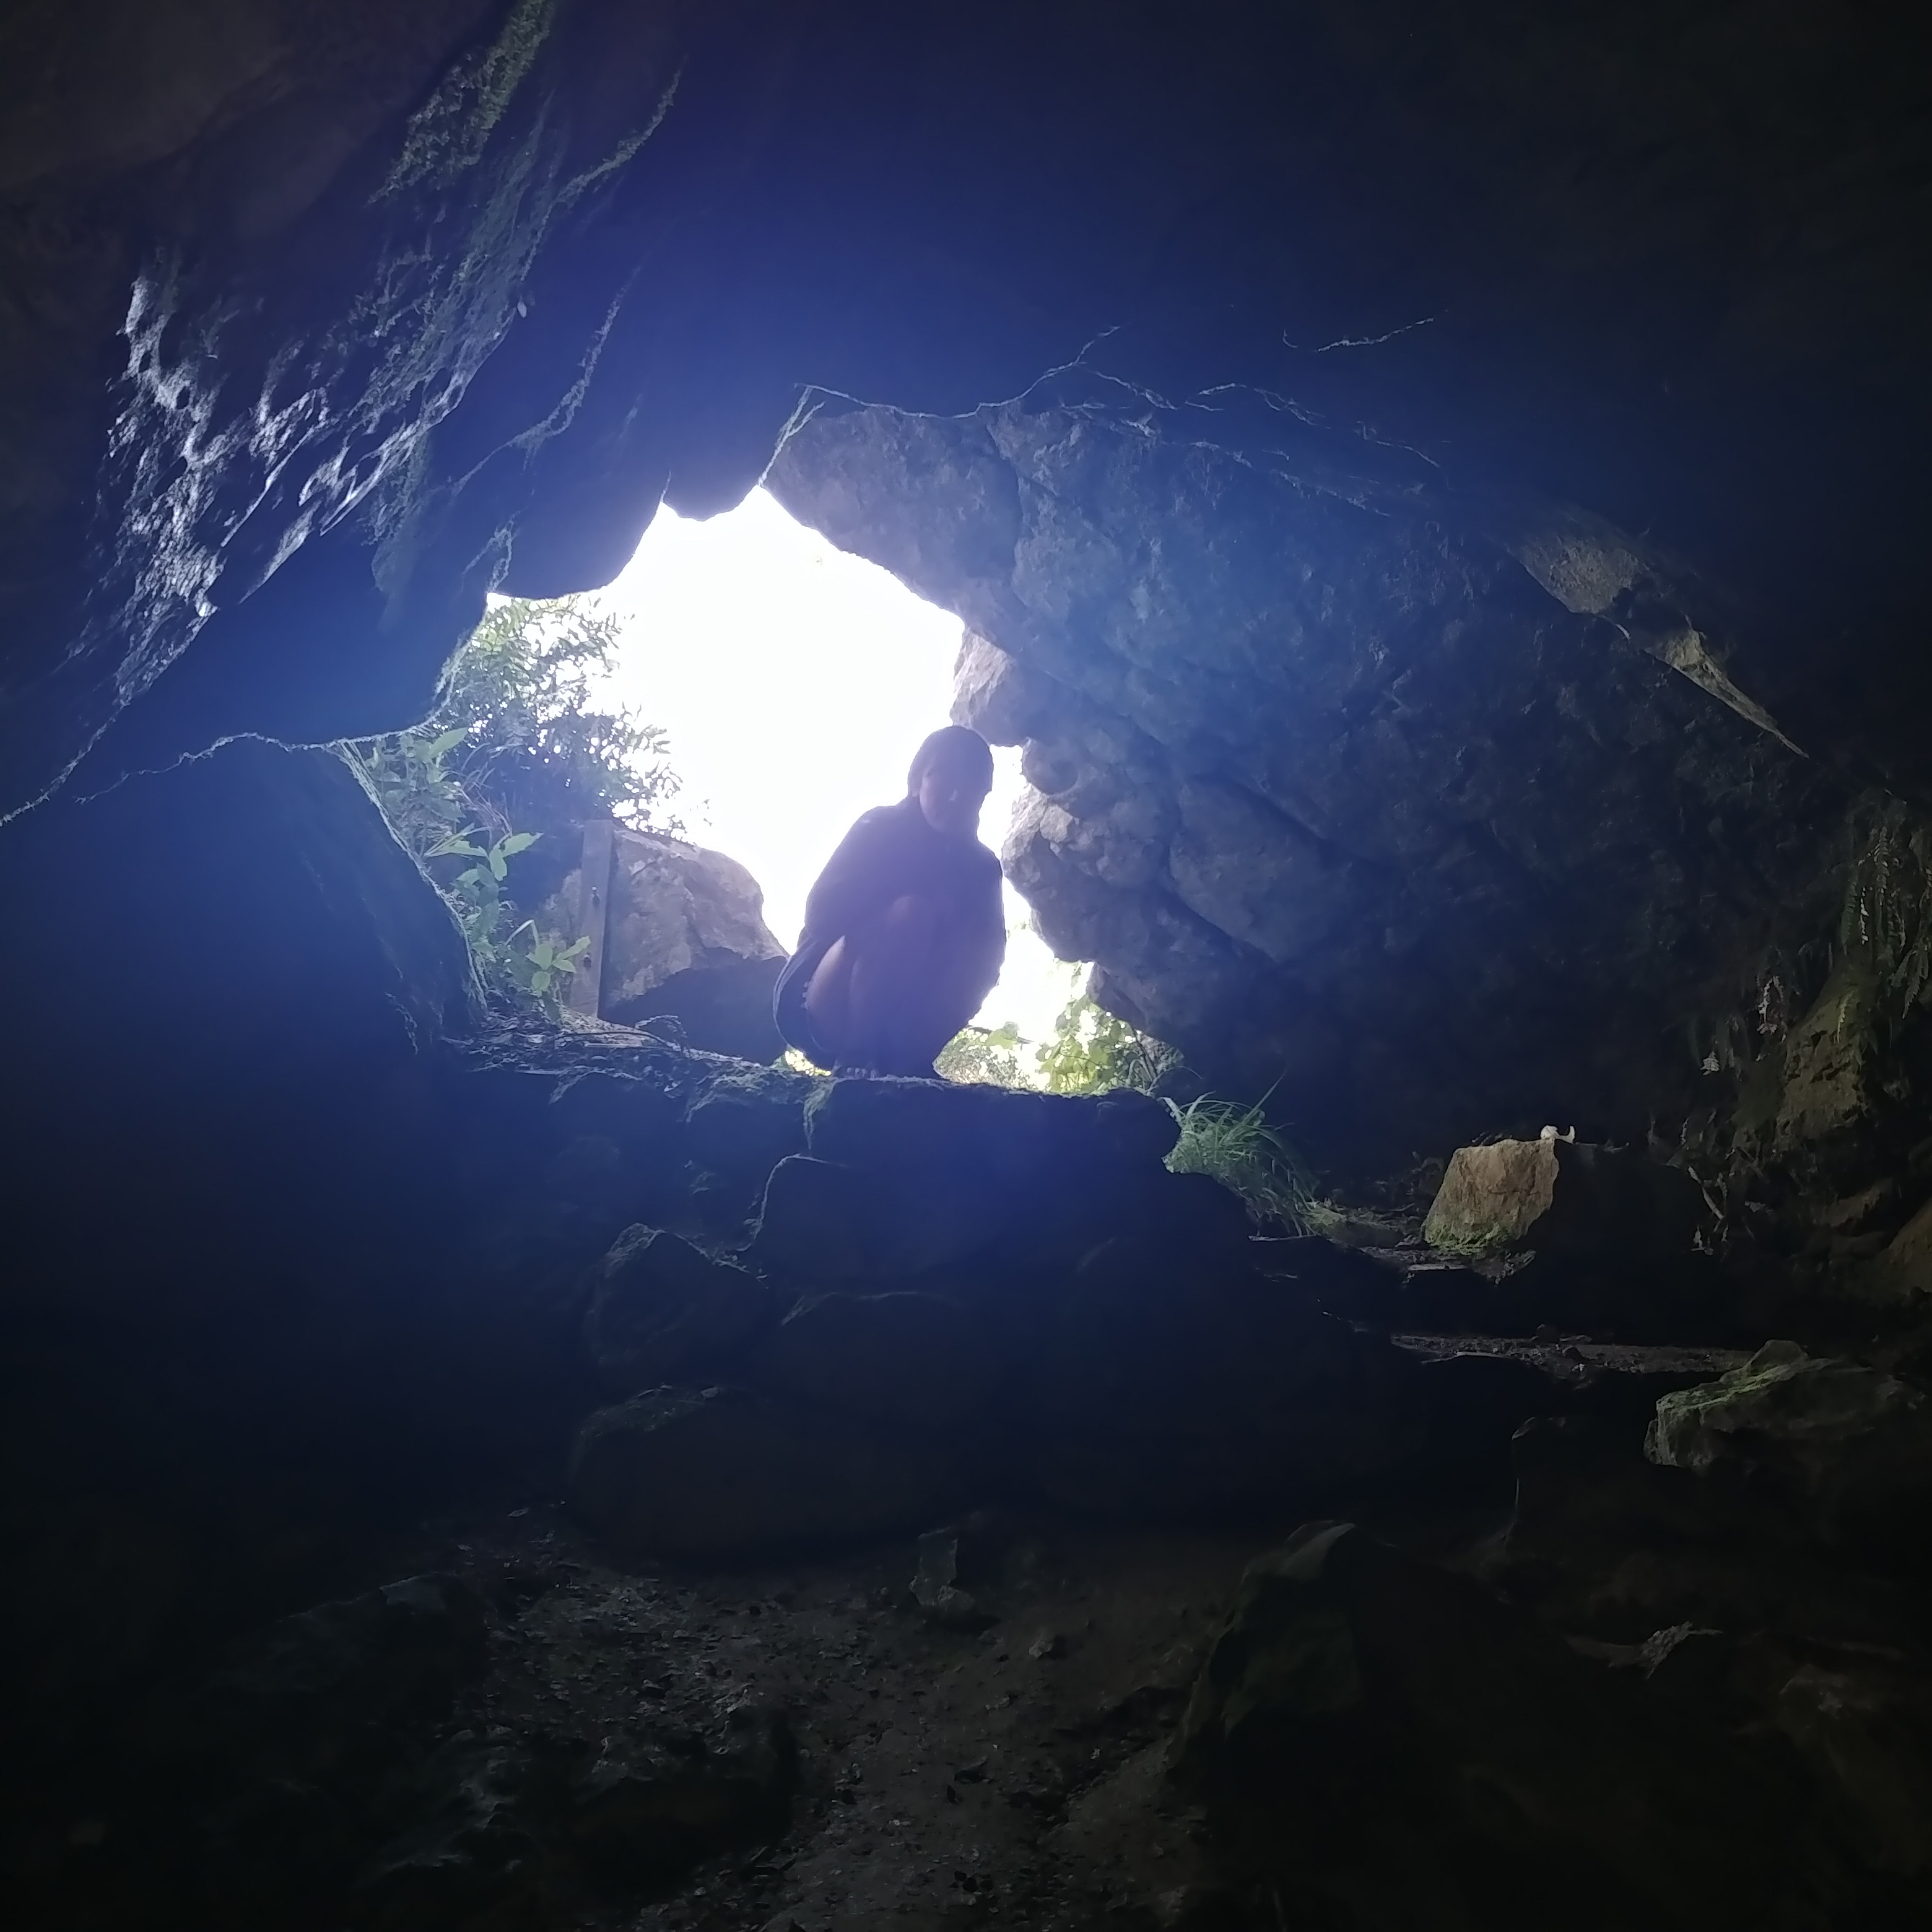 Cobden cave